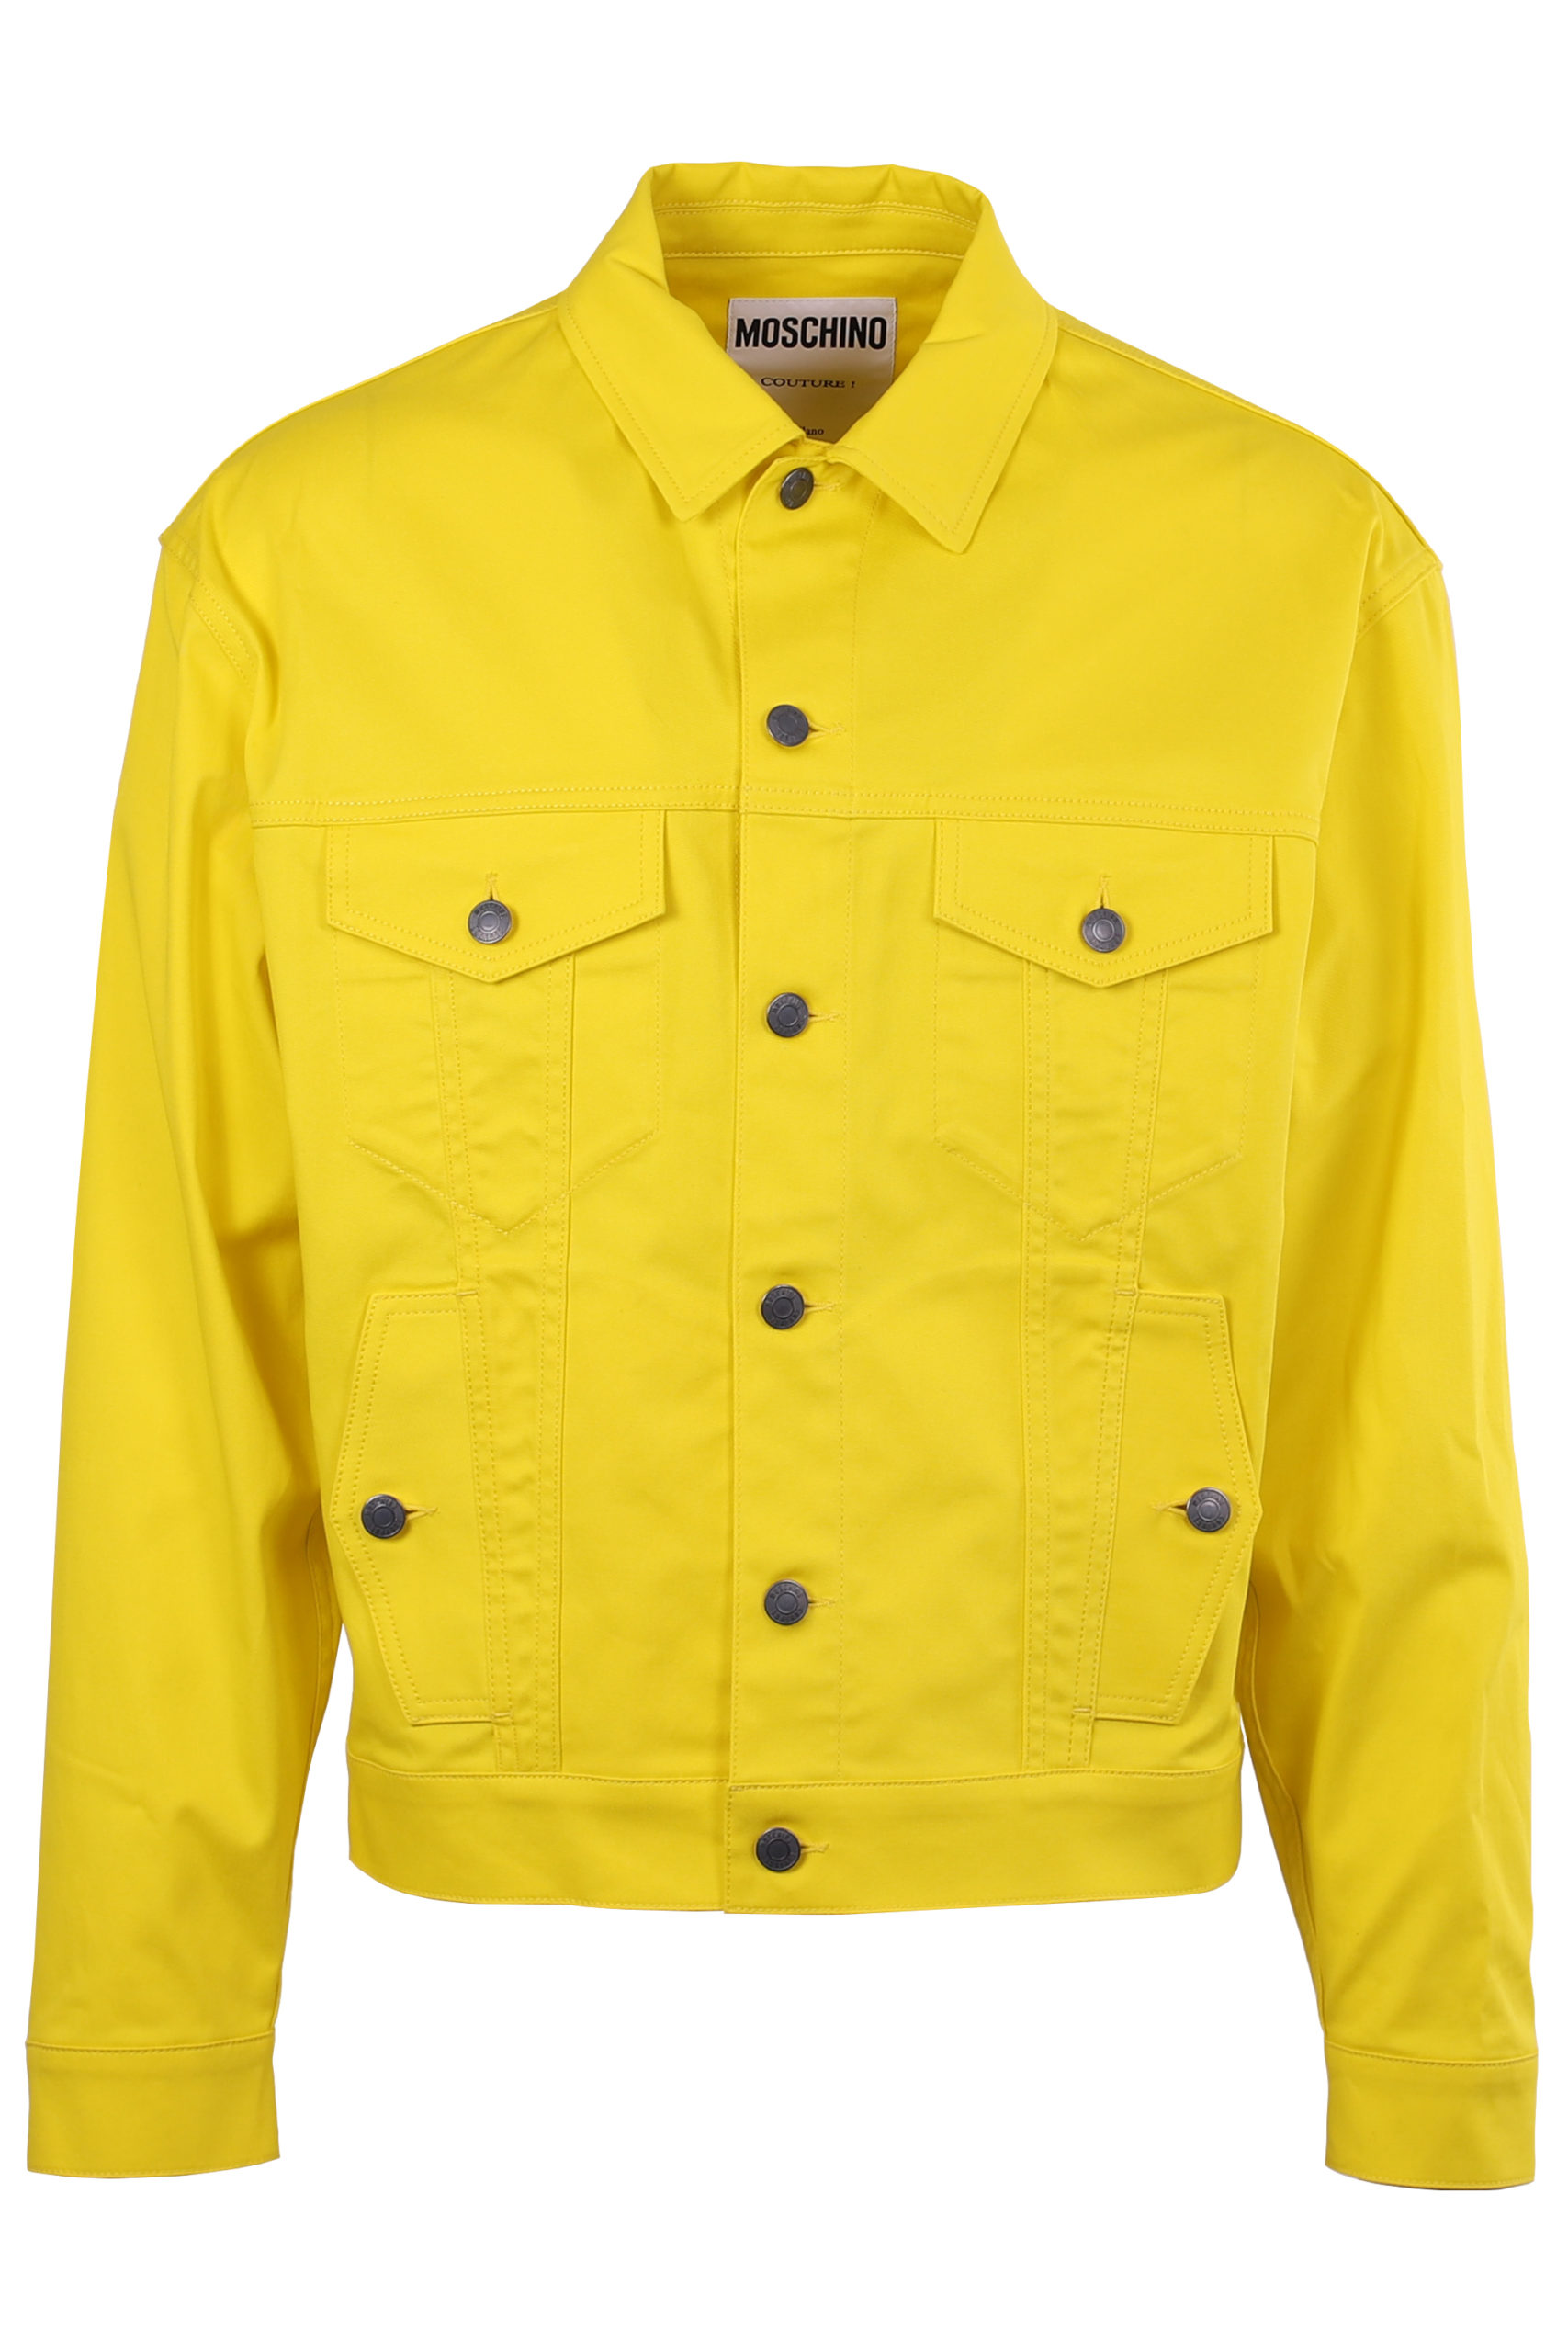 Chaqueta amarilla logo "Smiley" parte - BLS Fashion